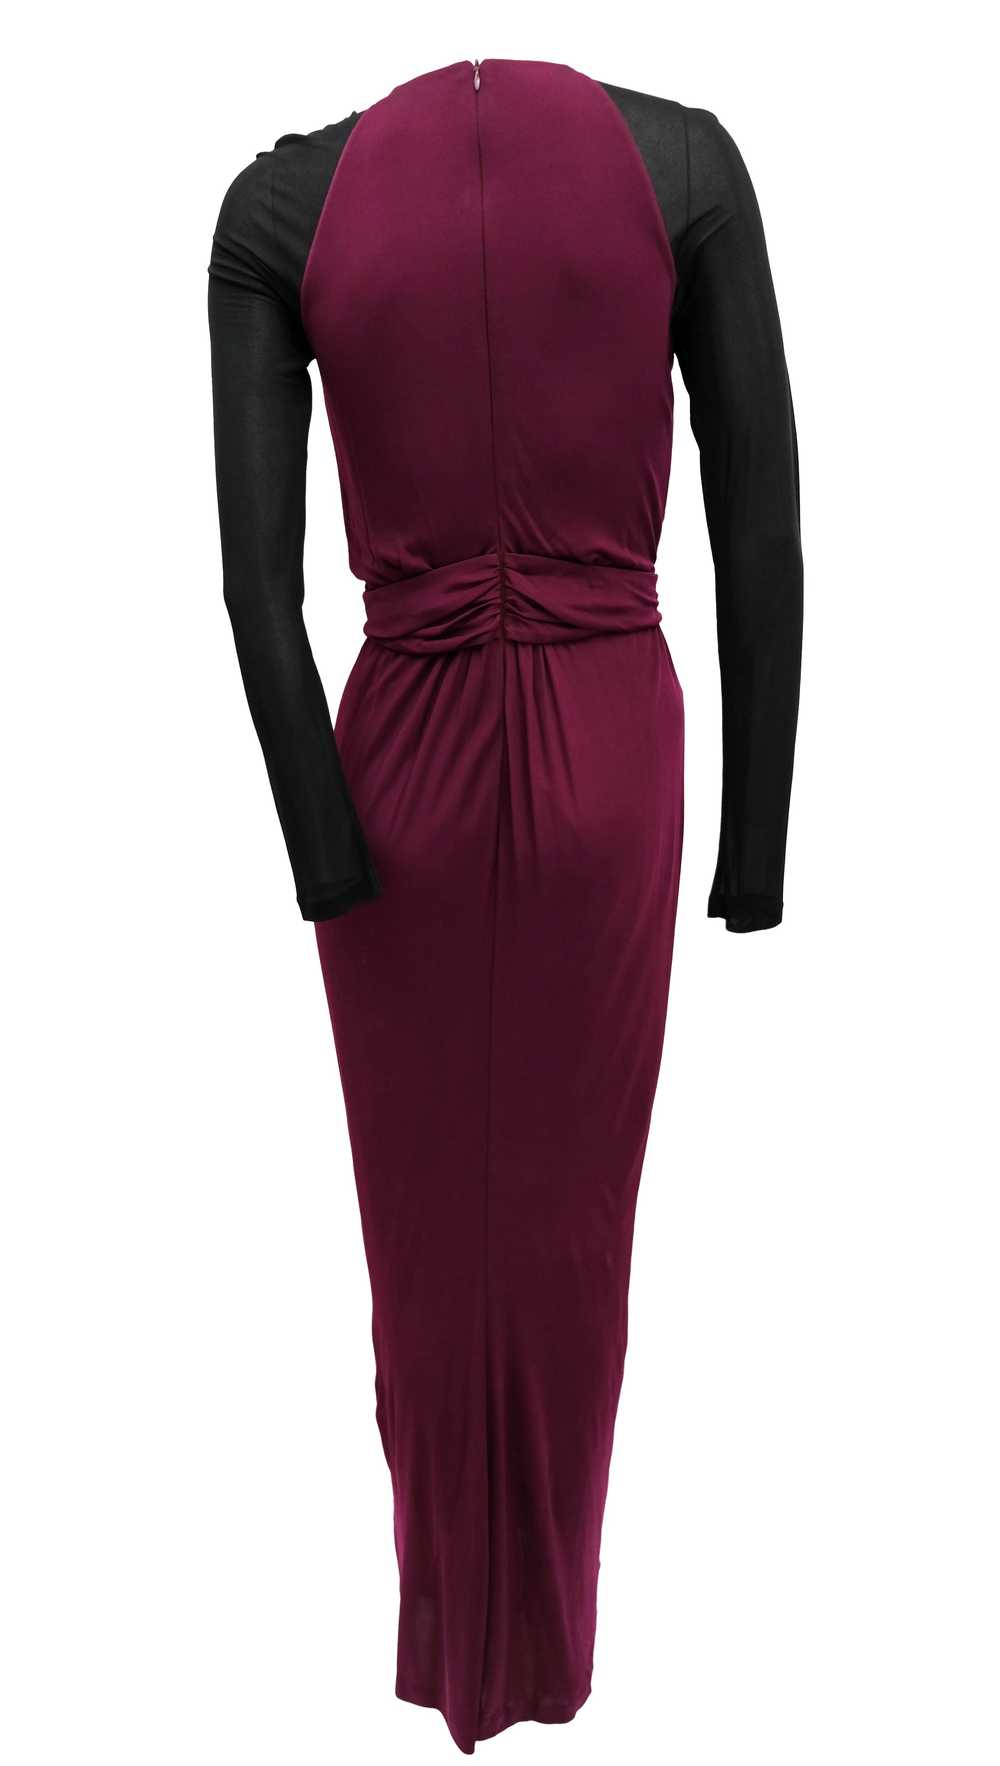 Hugo Boss Burgundy Floor Length Gown with Black S… - image 3